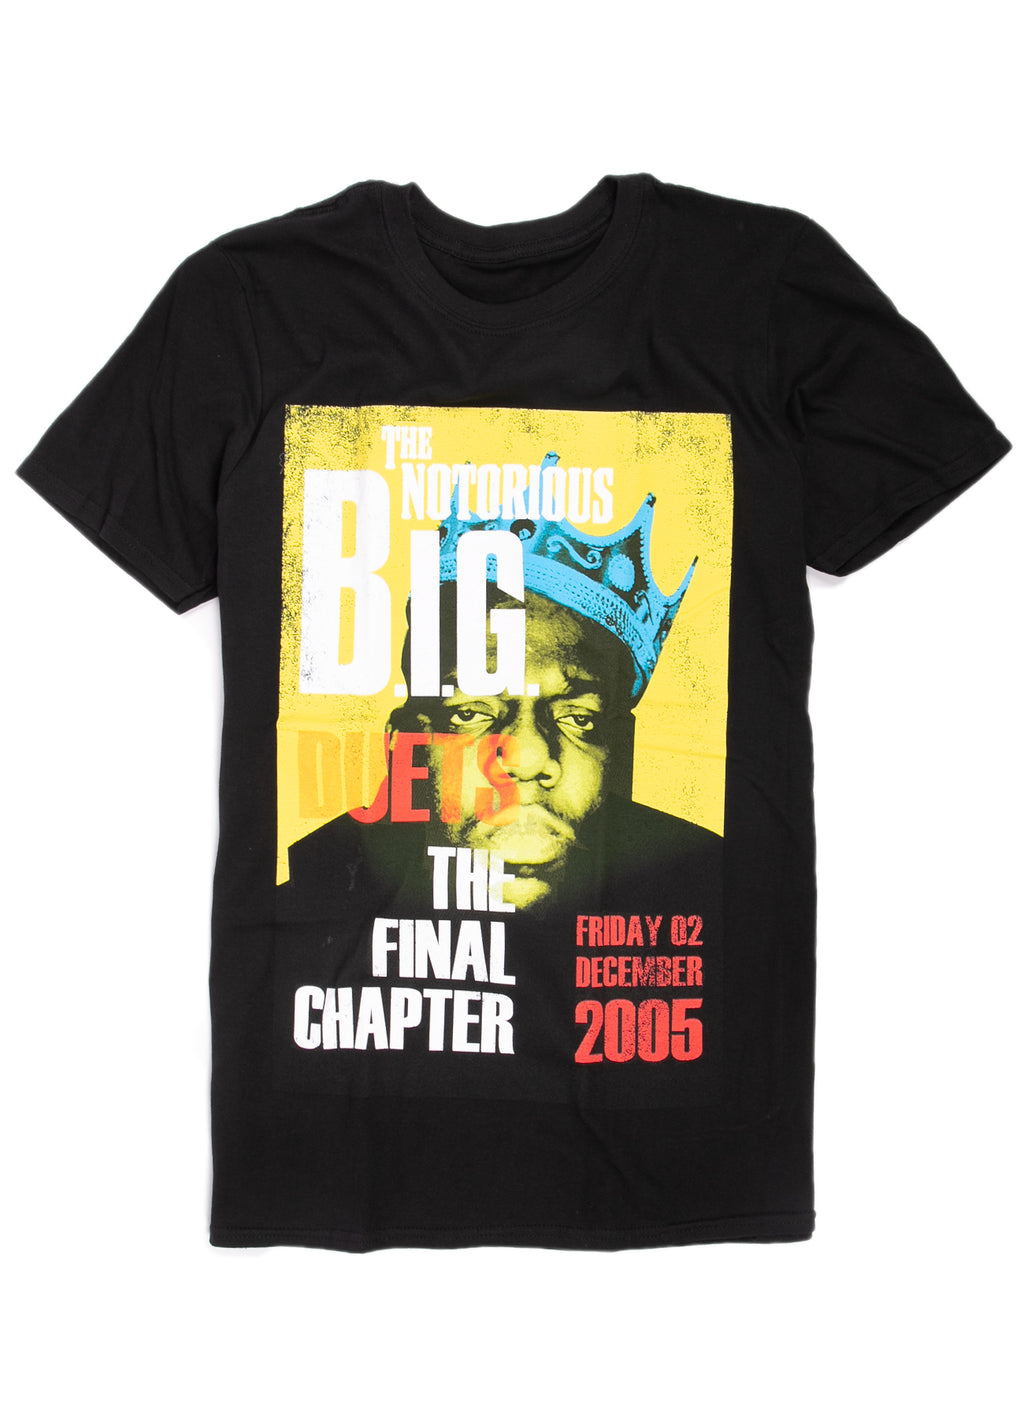 Biggie Smalls Duets album cover t-shirt.